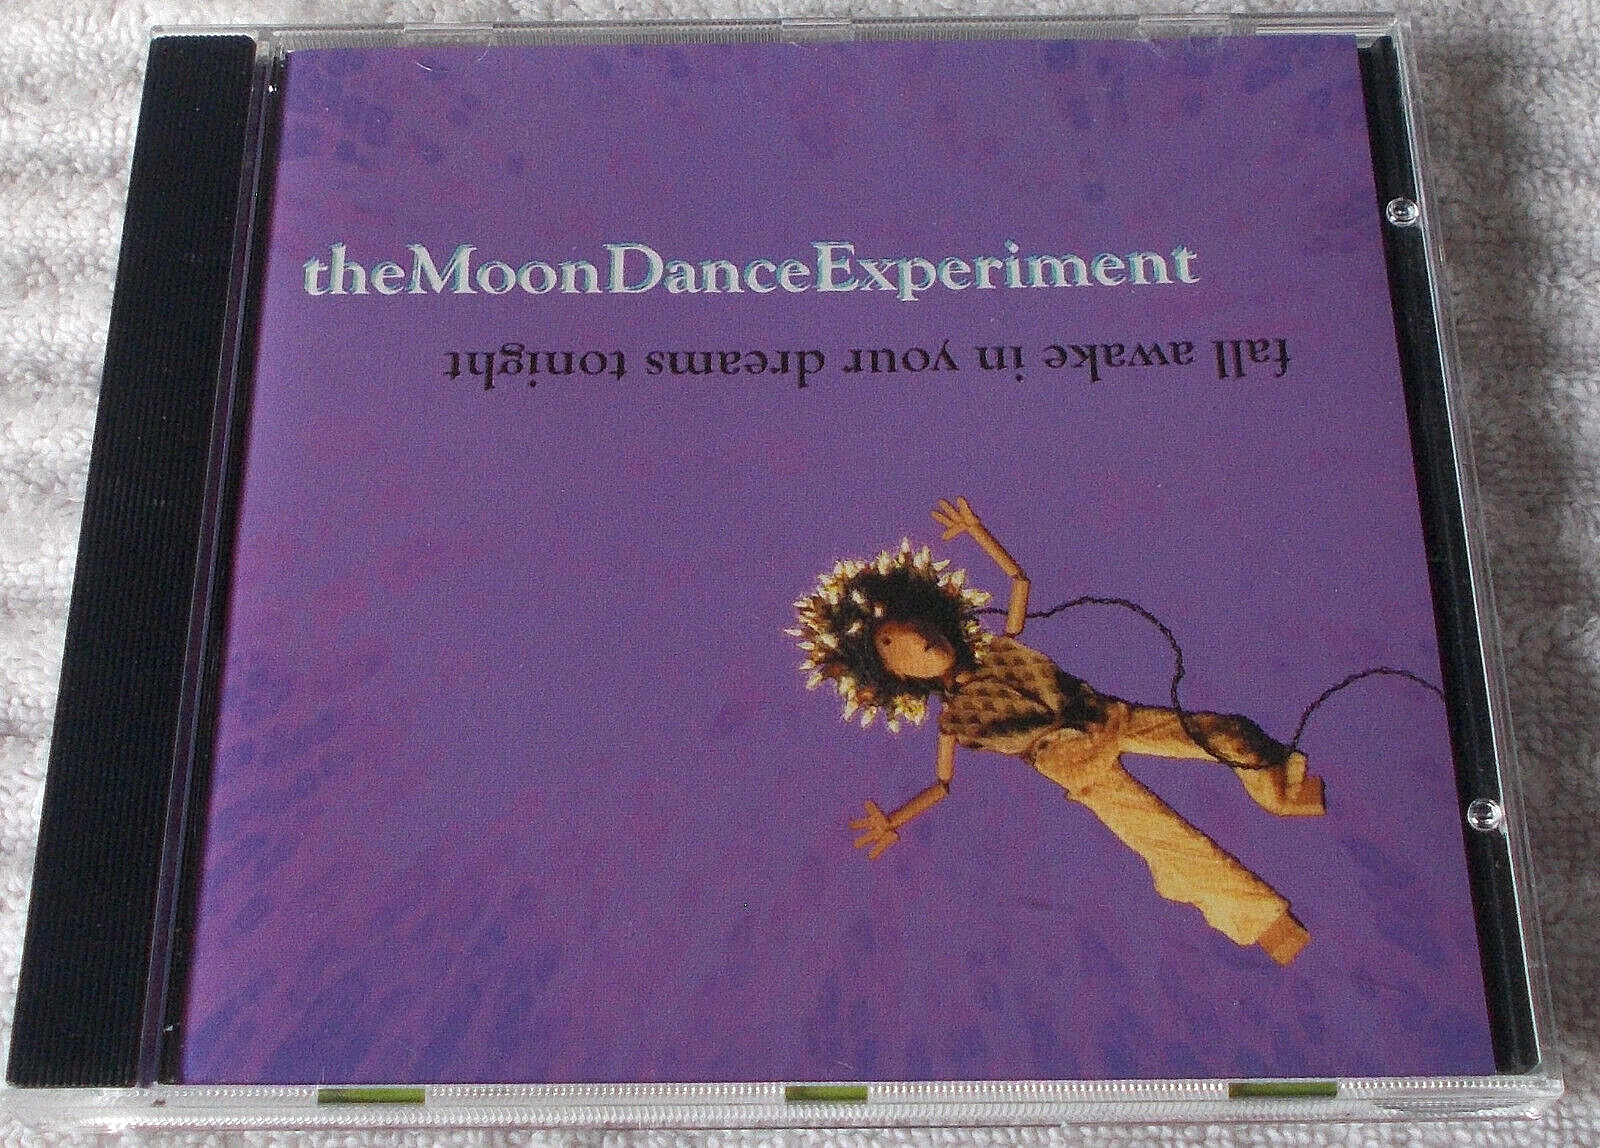 MOON DANCE EXPERIMENT - FALL AWAKE IN YOUR DREAMS TONIGHT OHIO ART ROCK SEALD CD